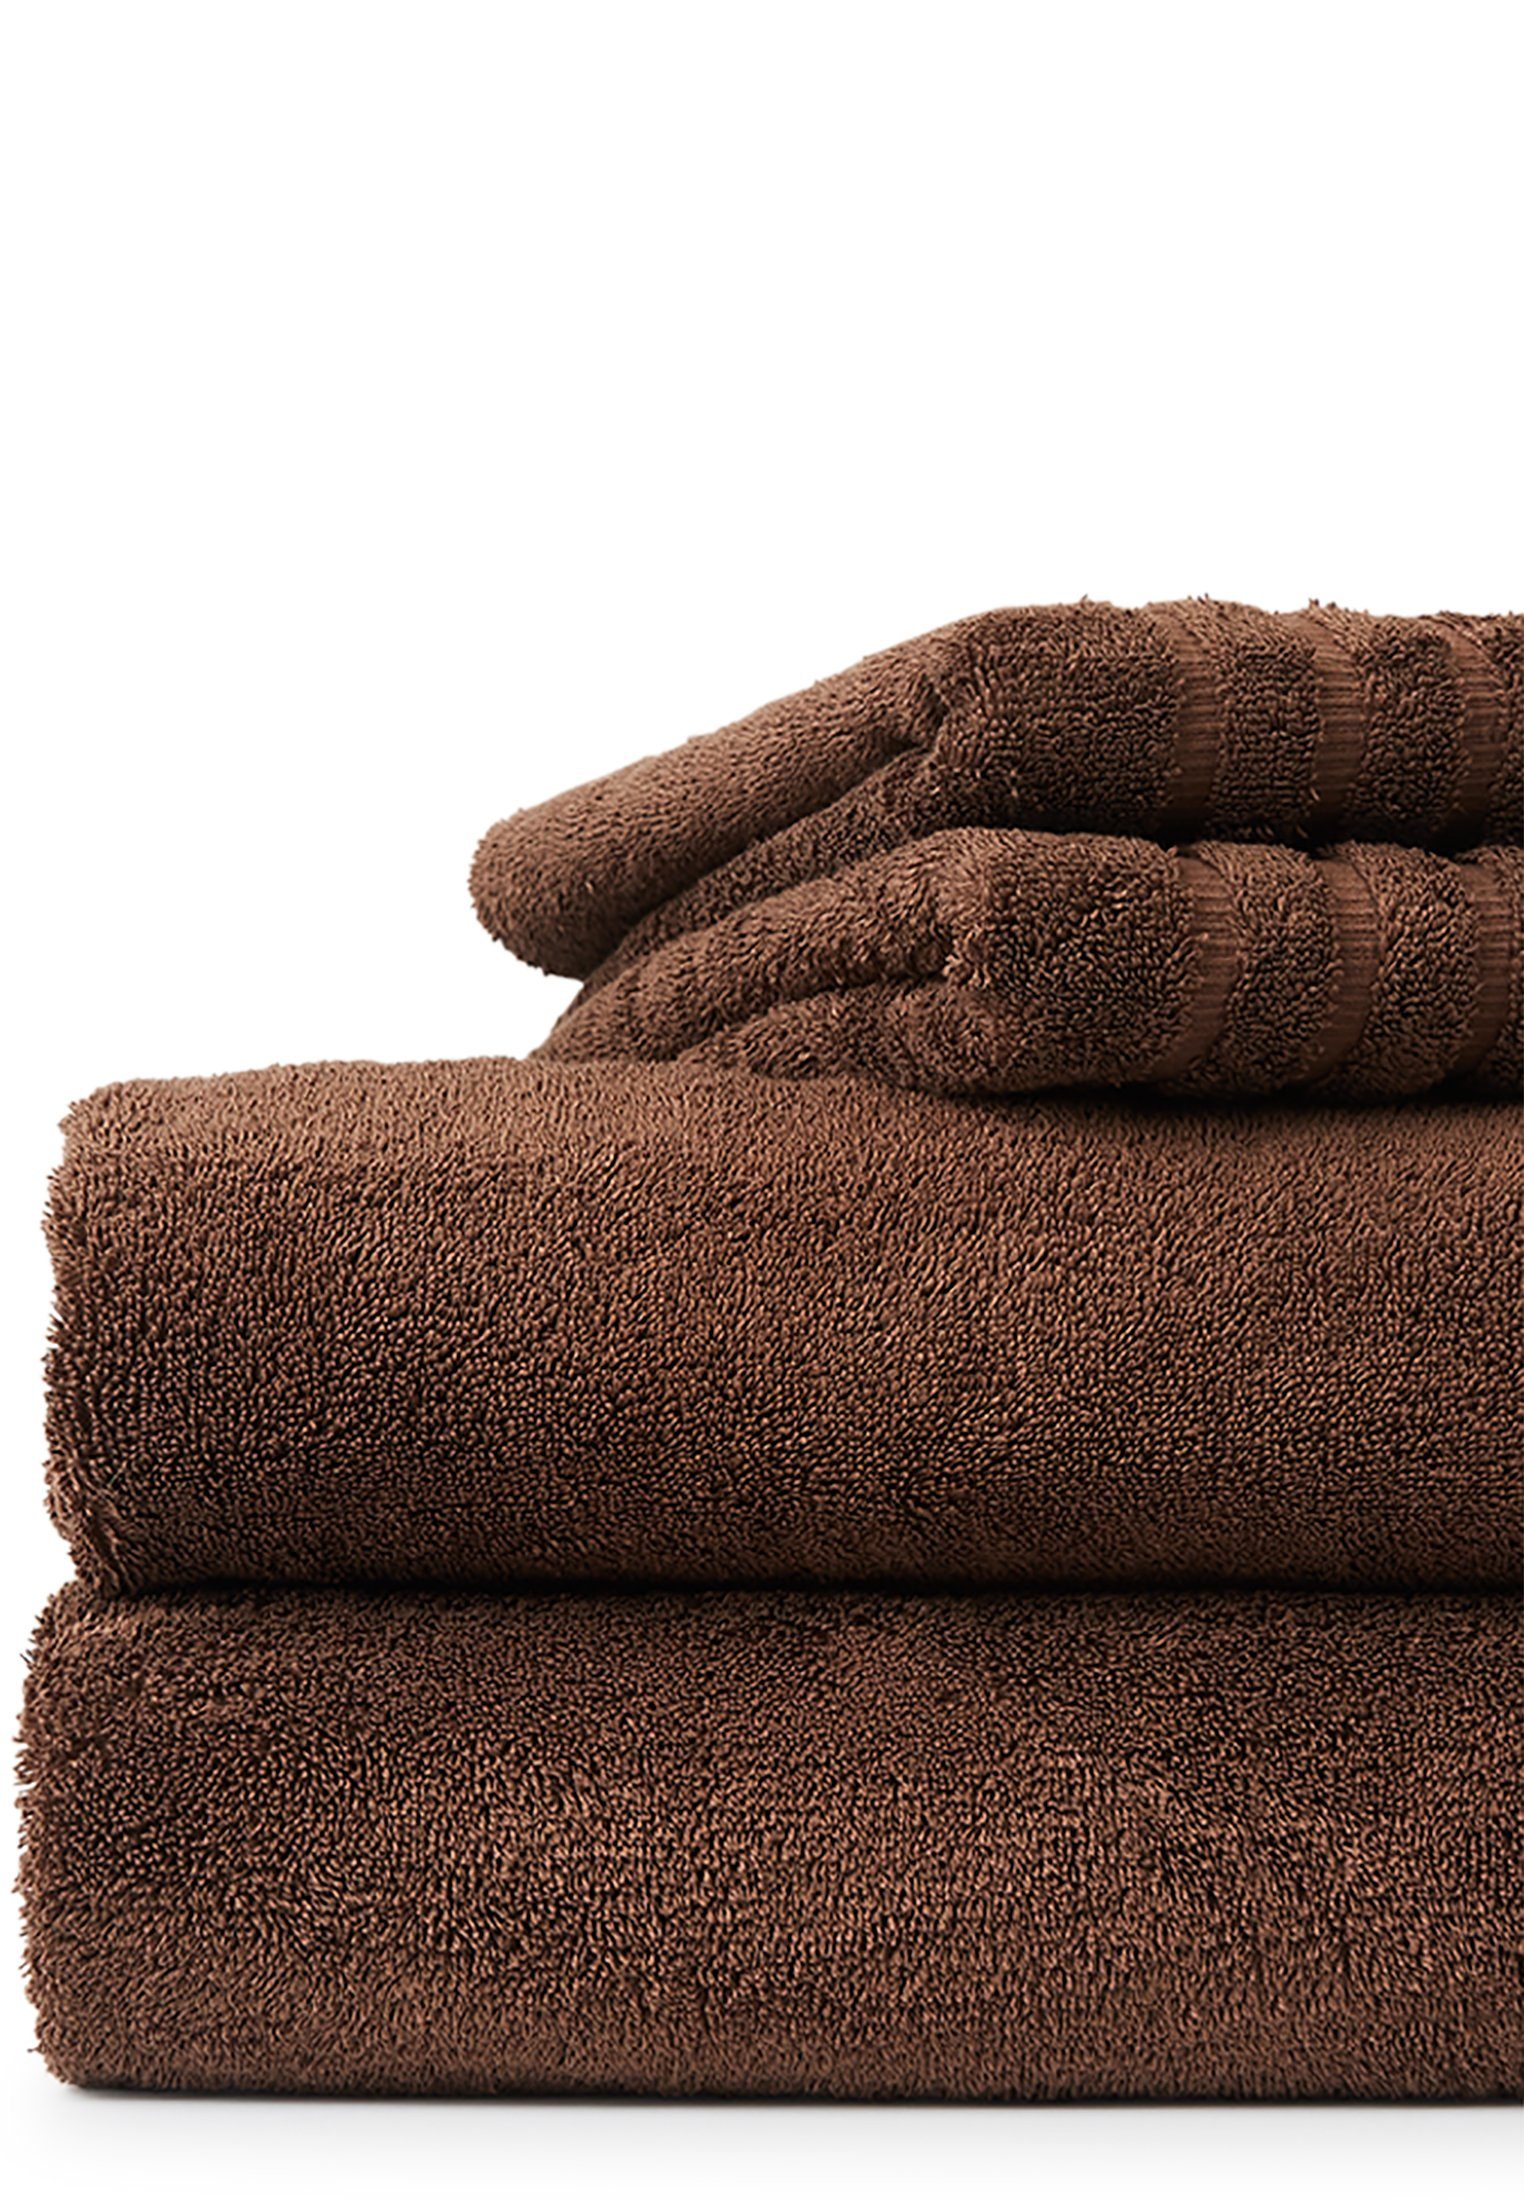 Lexington Handtuch Original Towel brown hazel